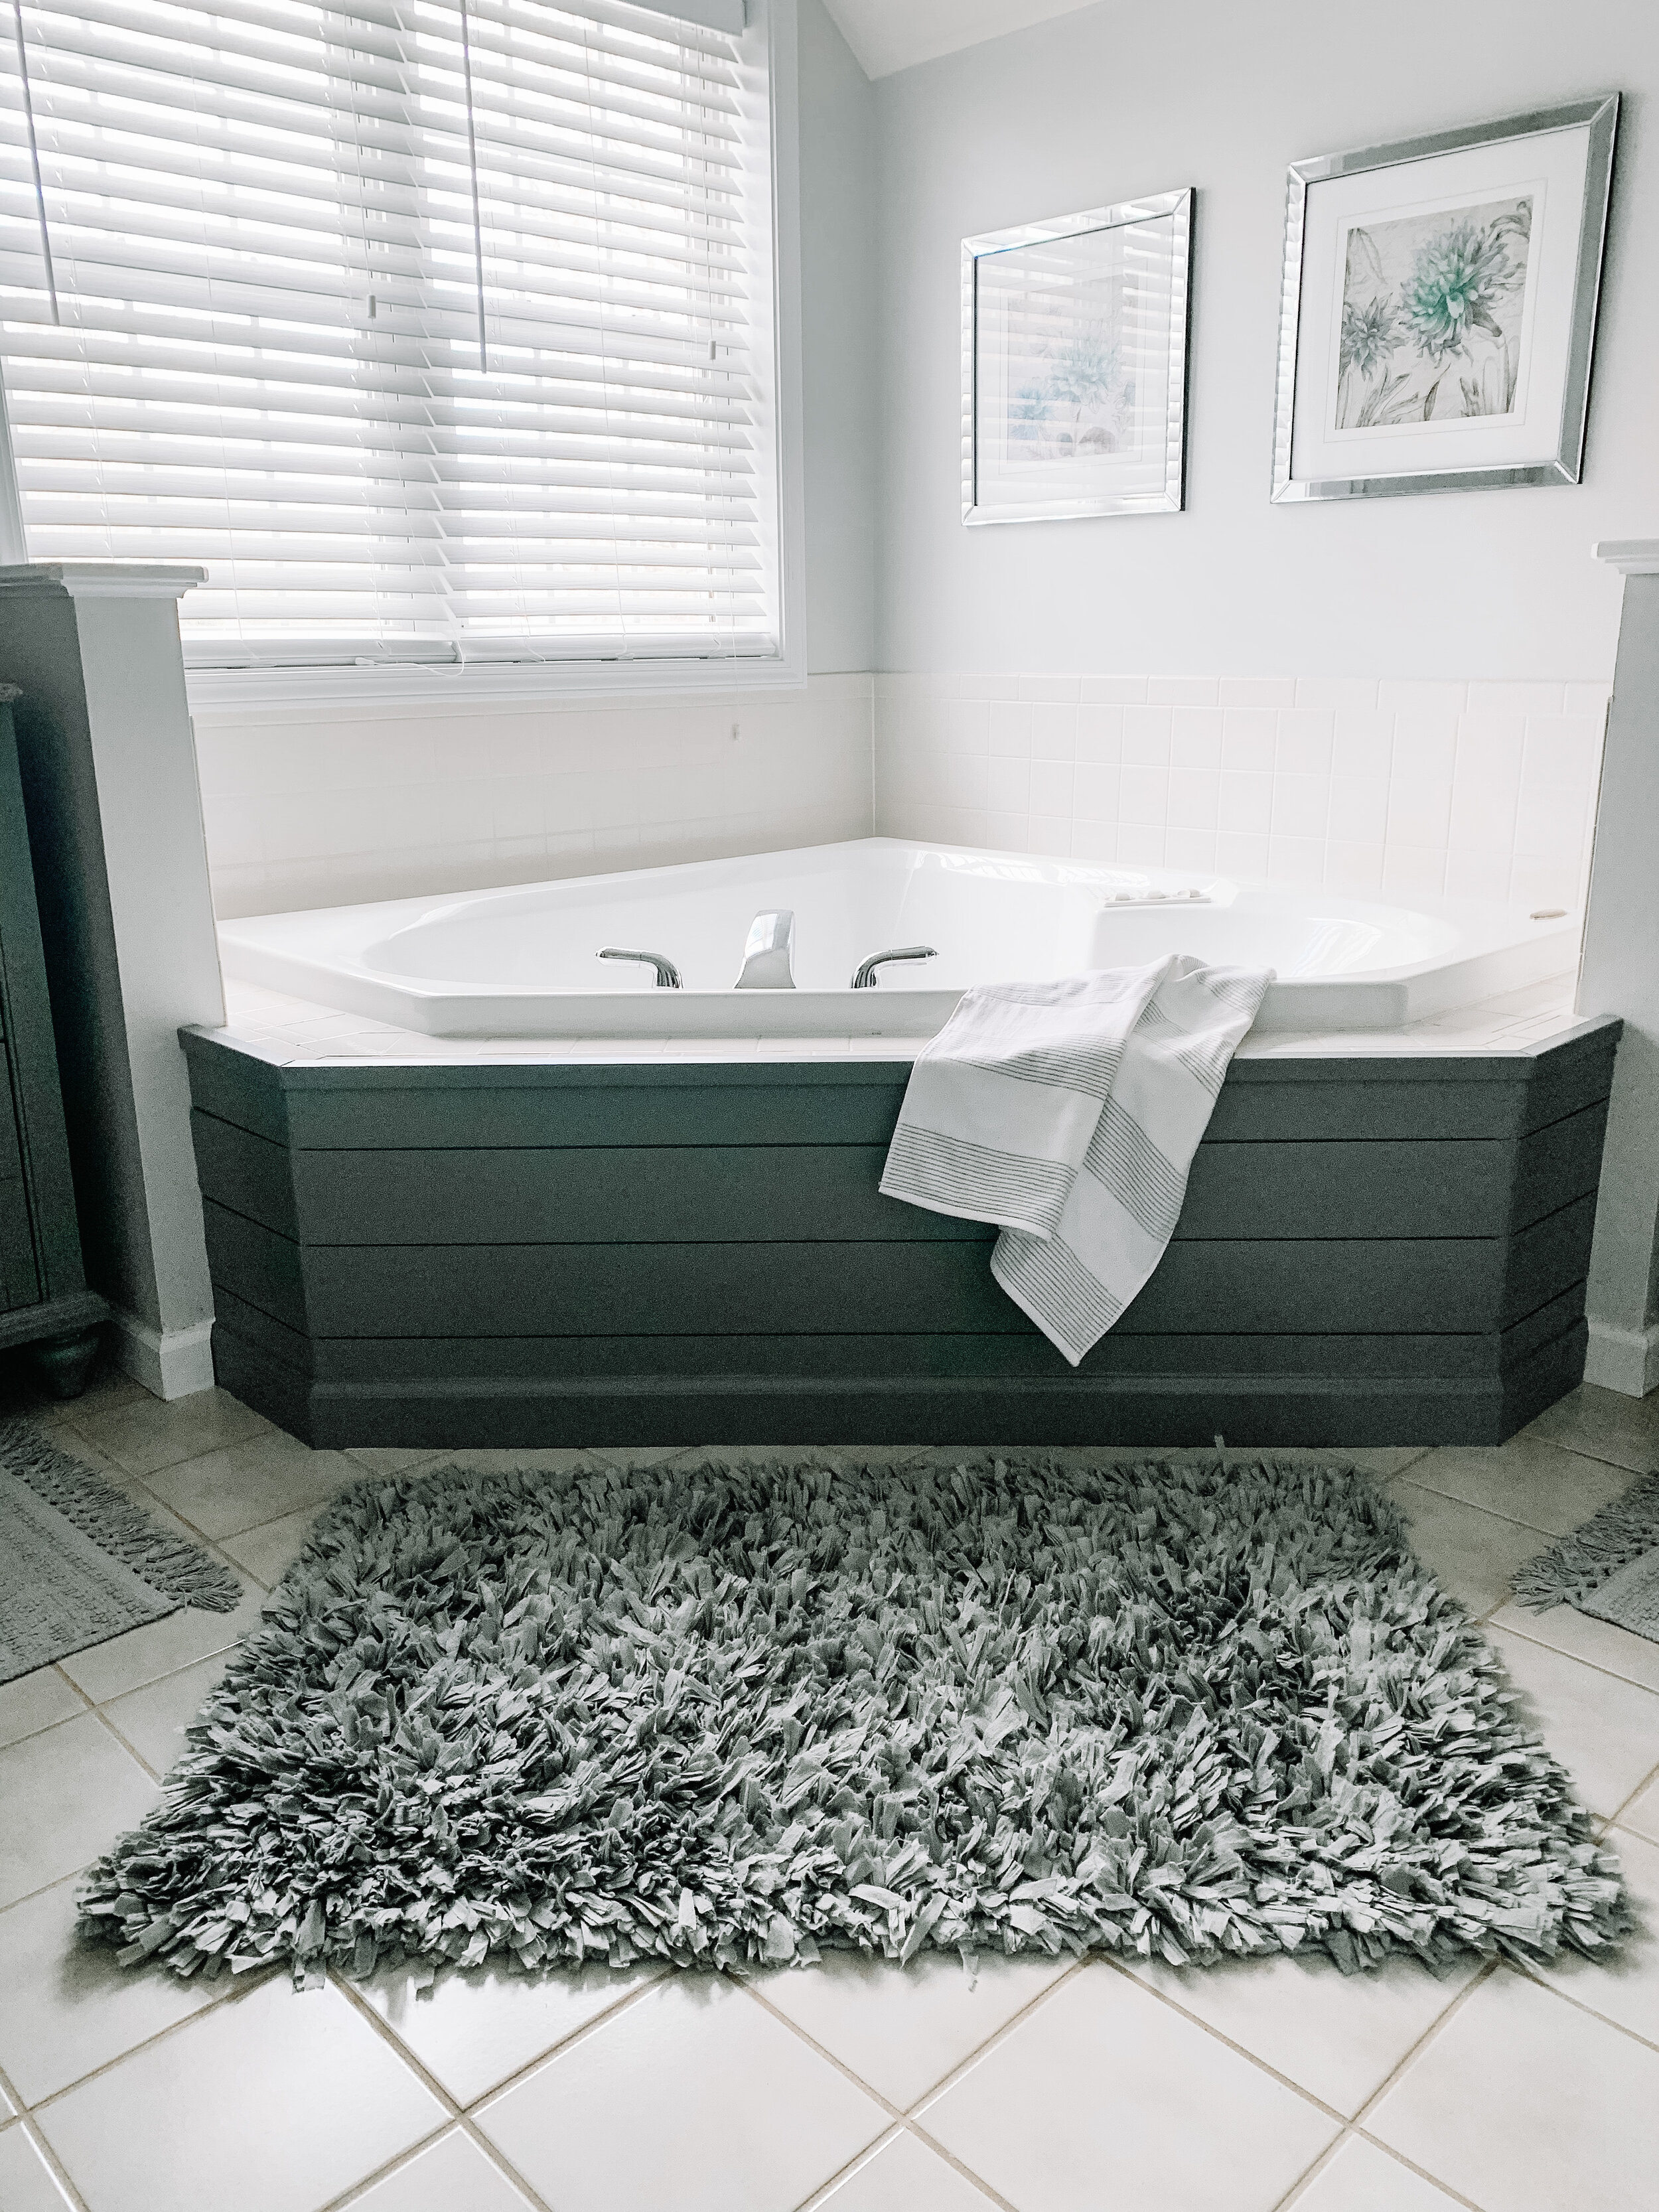 Ideas To Coverup Your Bathtub Surround, Tile Design Ideas For Tub Surrounds